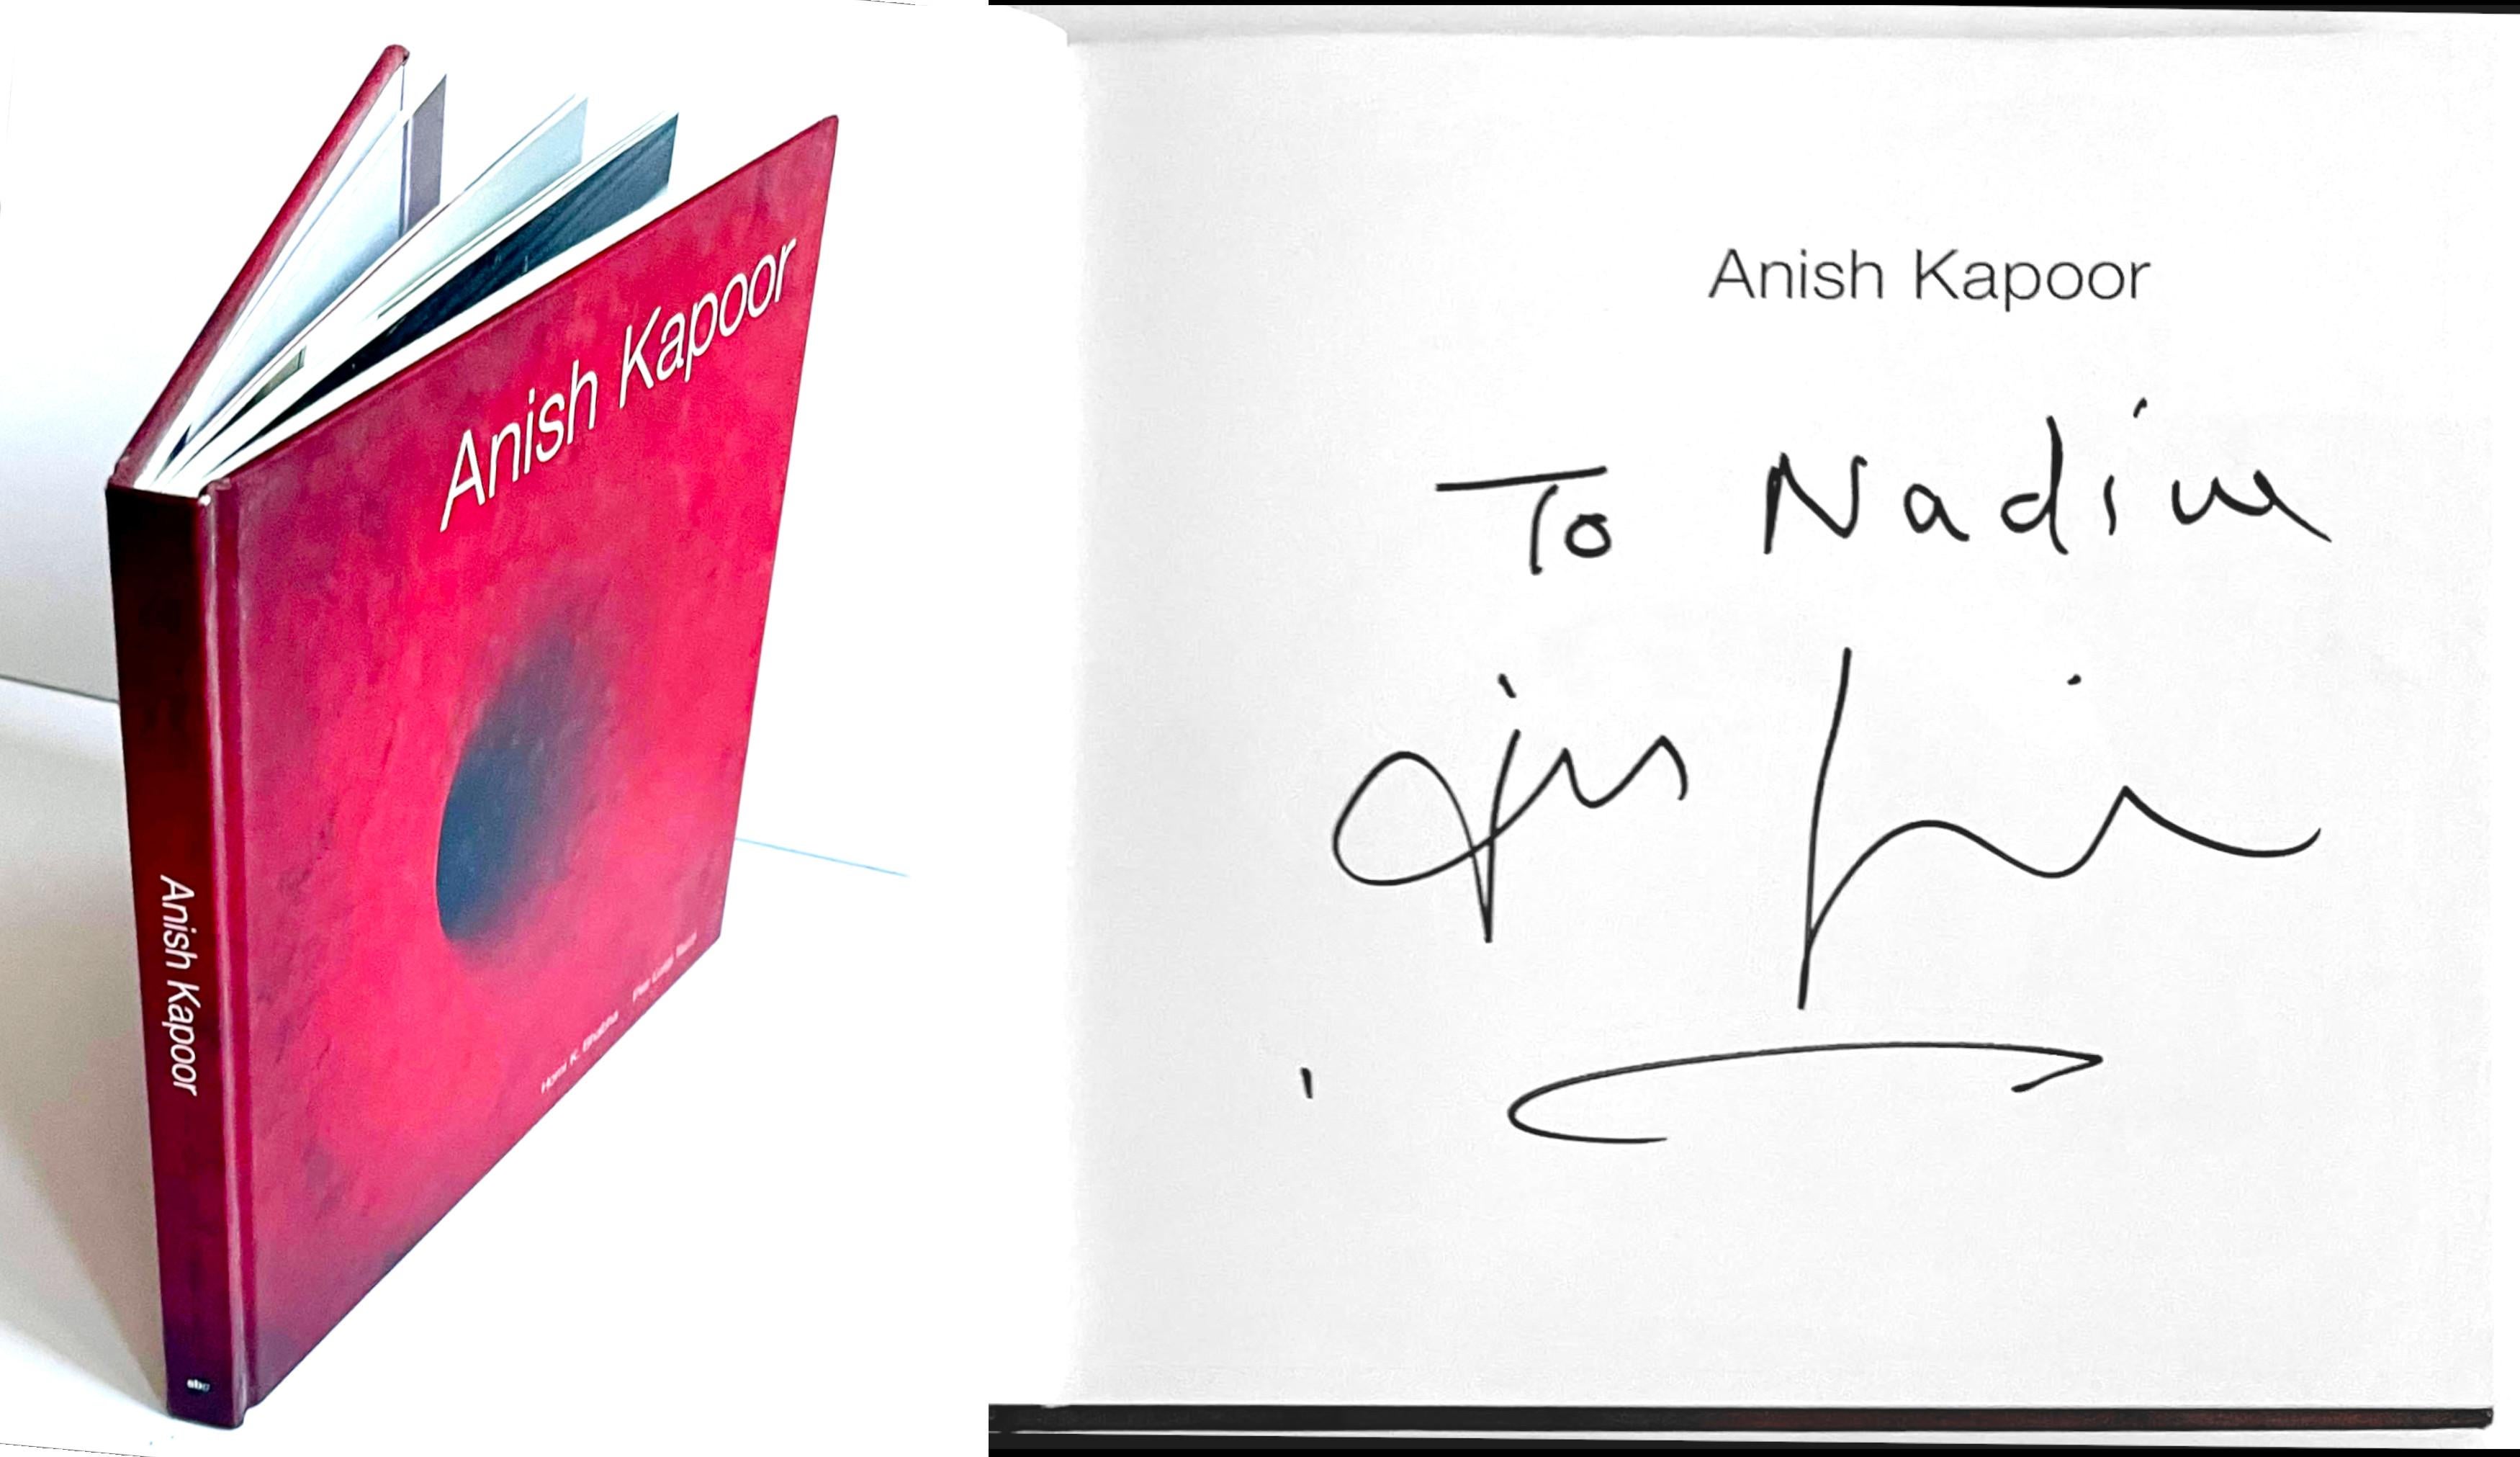 Anish Kapoor
Anish Kapoor (Hand signed and inscribed to Nadine by Anish Kapoor), 1998
Hardback monograph (Hand signed and inscribed to Nadine by Anish Kapoor) 
Hand signed and inscribed to the present owner by Anish Kapoor
8 3/4 × 8 3/4 × 1/2